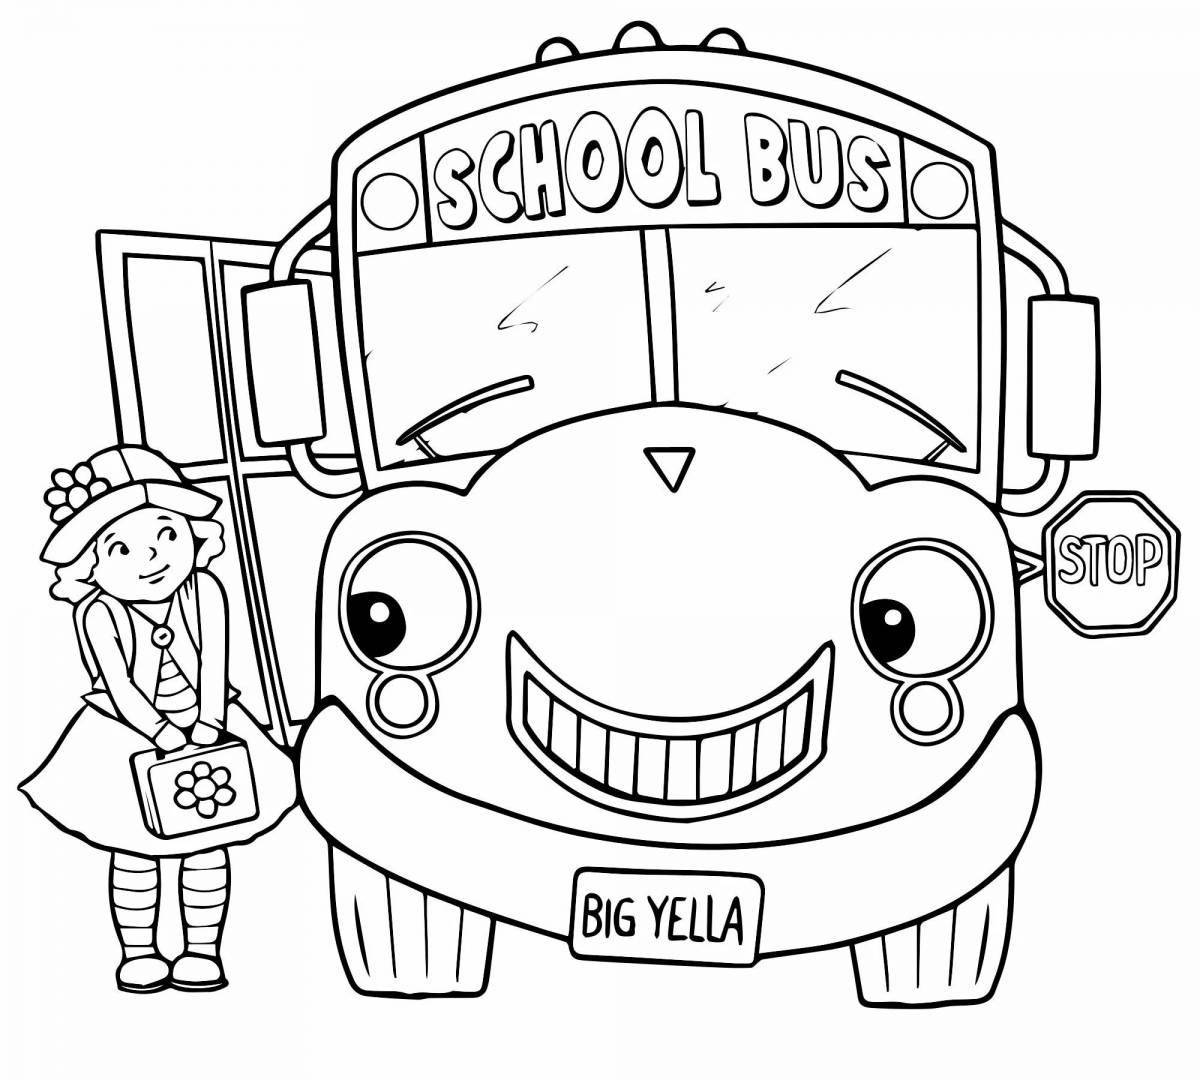 Gordon's colorful school bus coloring page